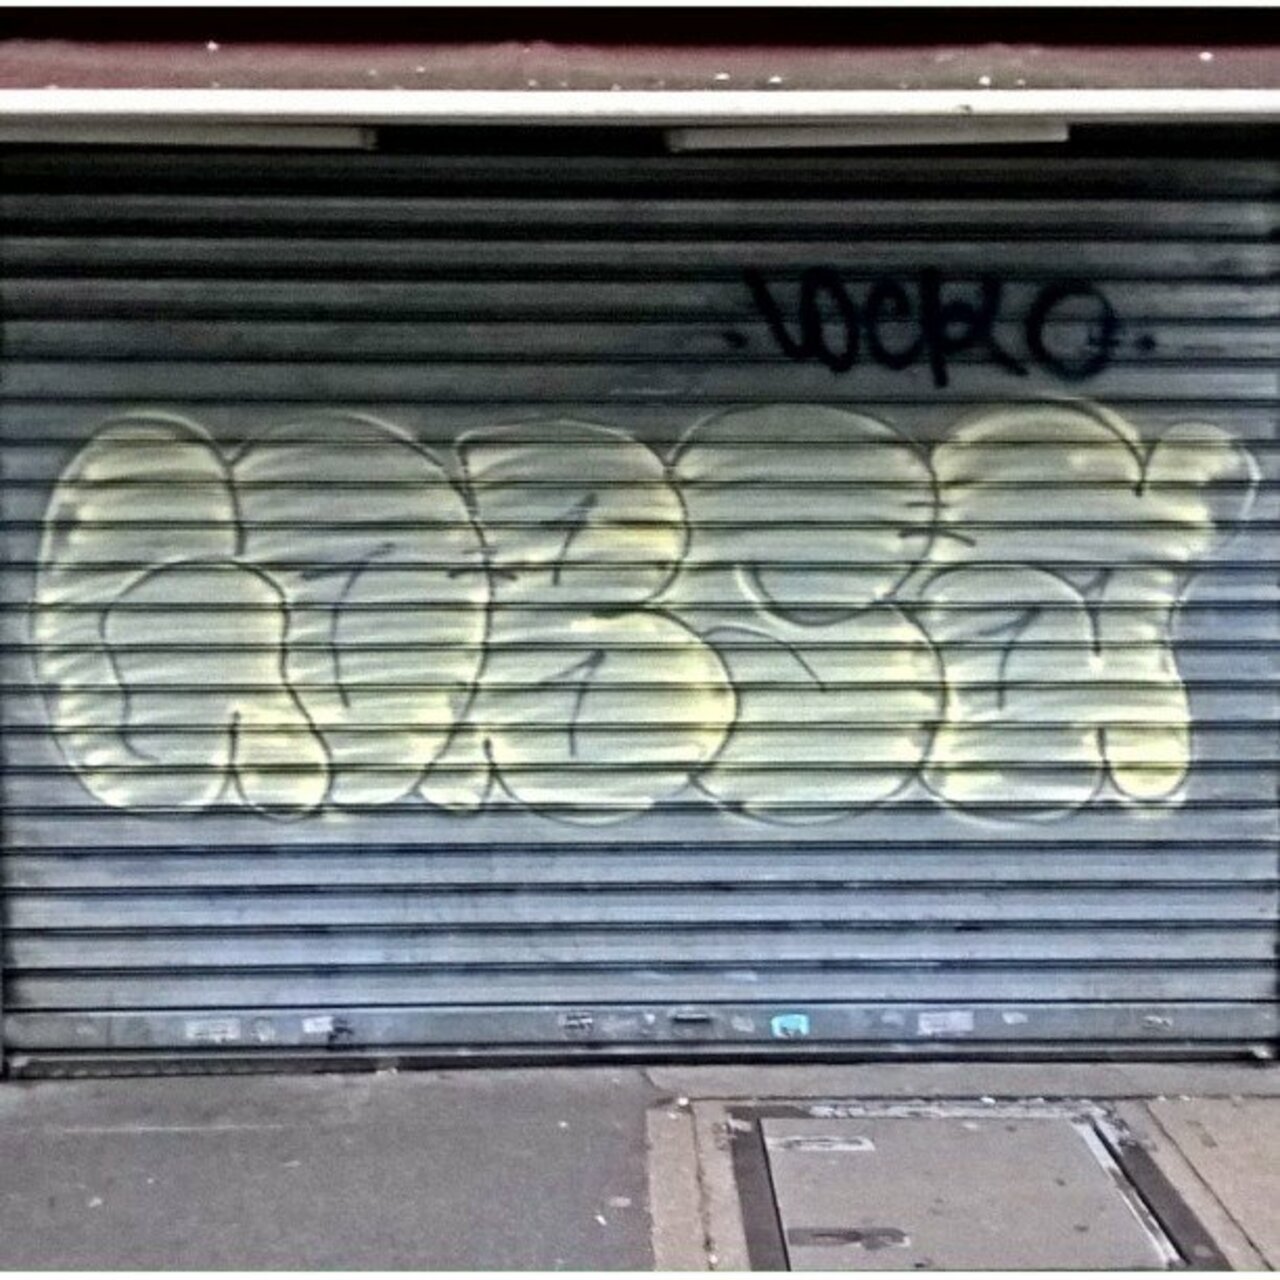 GOBSA
#streetart #graffiti #graff #art #fatcap #bombing #sprayart #spraycanart #wallart #handstyle #lettering #urba… https://t.co/ityhxXC5Oo